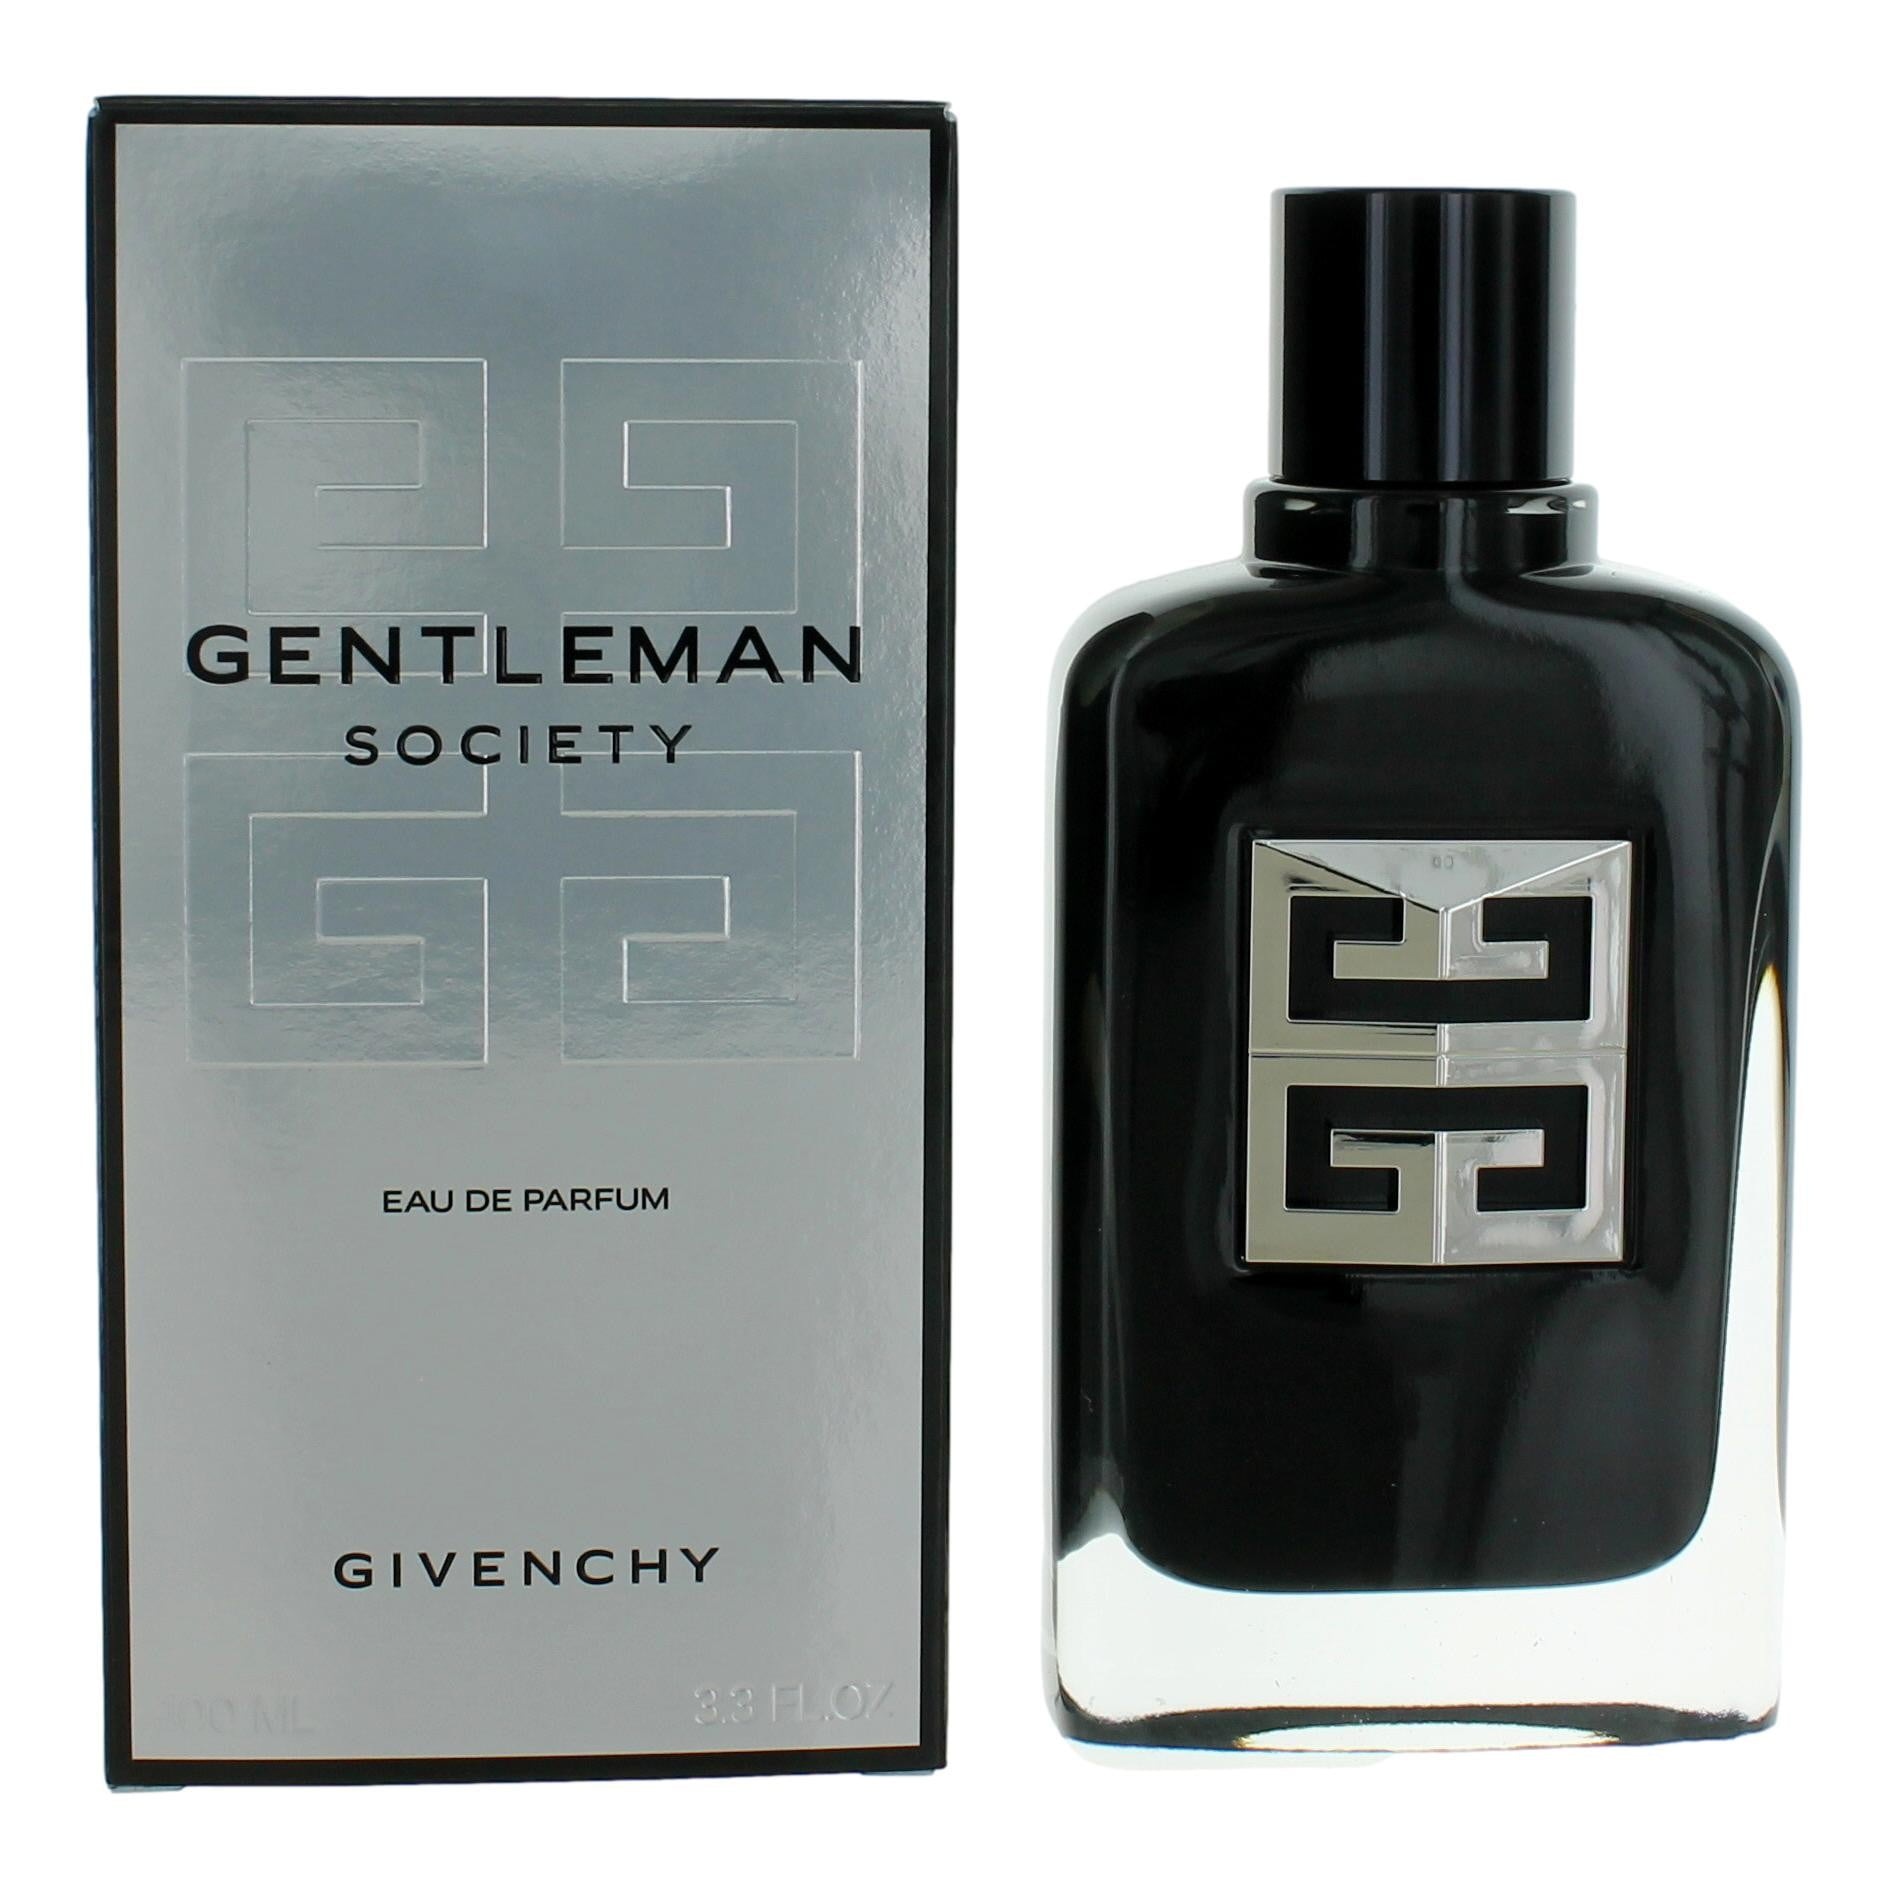 Gentleman Society by Givenchy, 3.3 oz EDP Spray for Men - Walmart.com